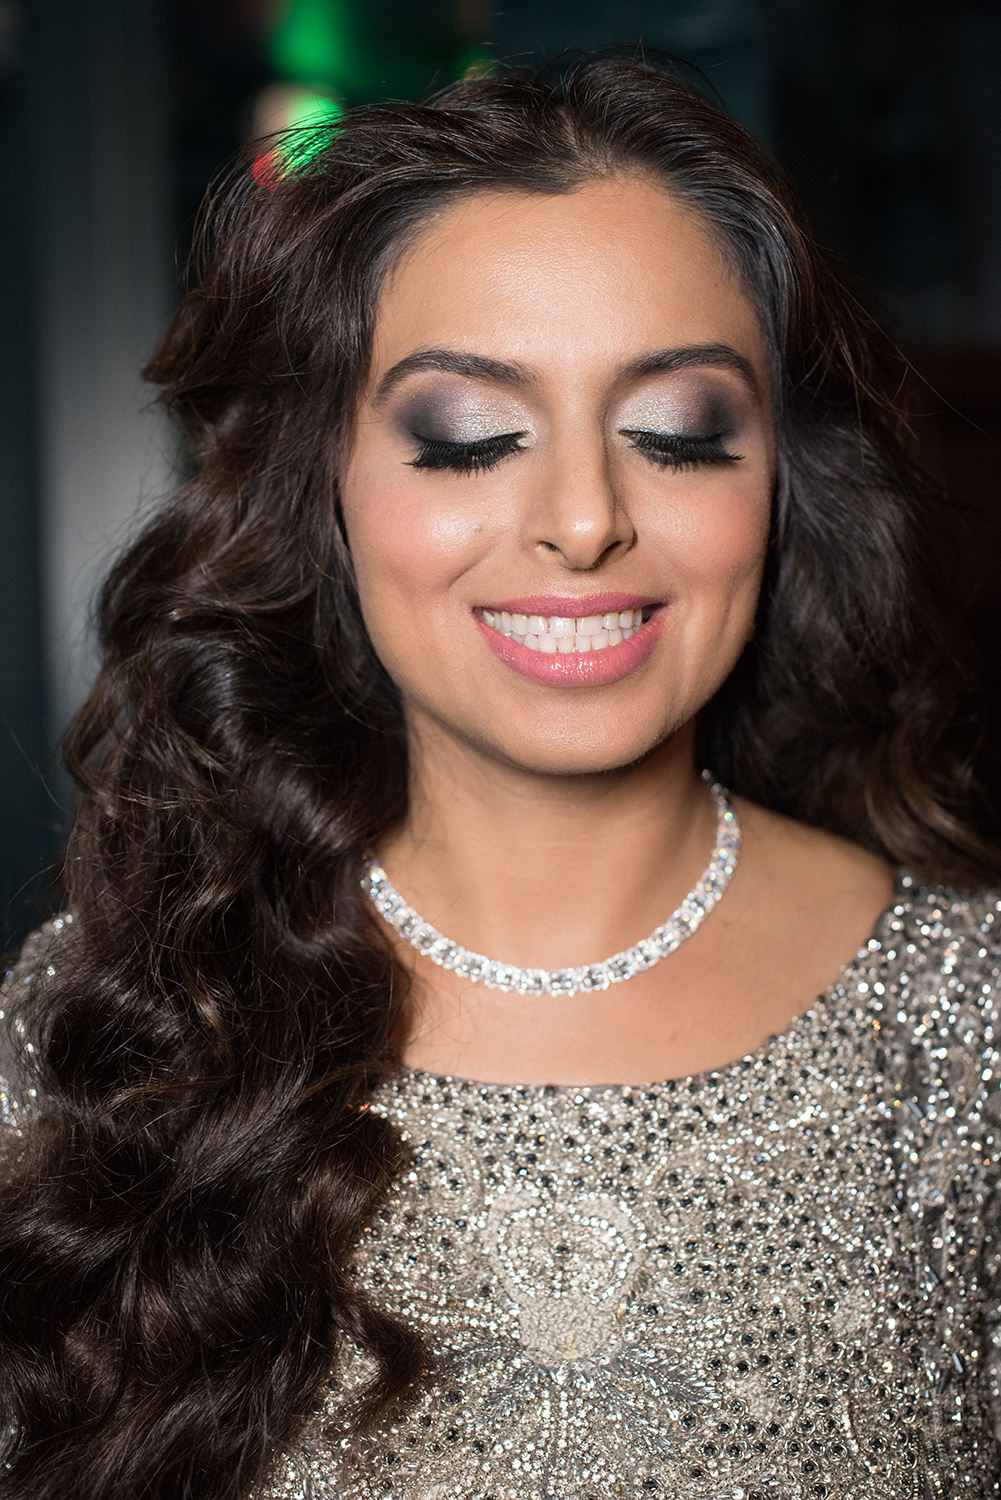 Glamorous glow indian bride silver glitter eyeshadow grey black pink lips by Beauty Affair Agne Skaringa copy.jpg